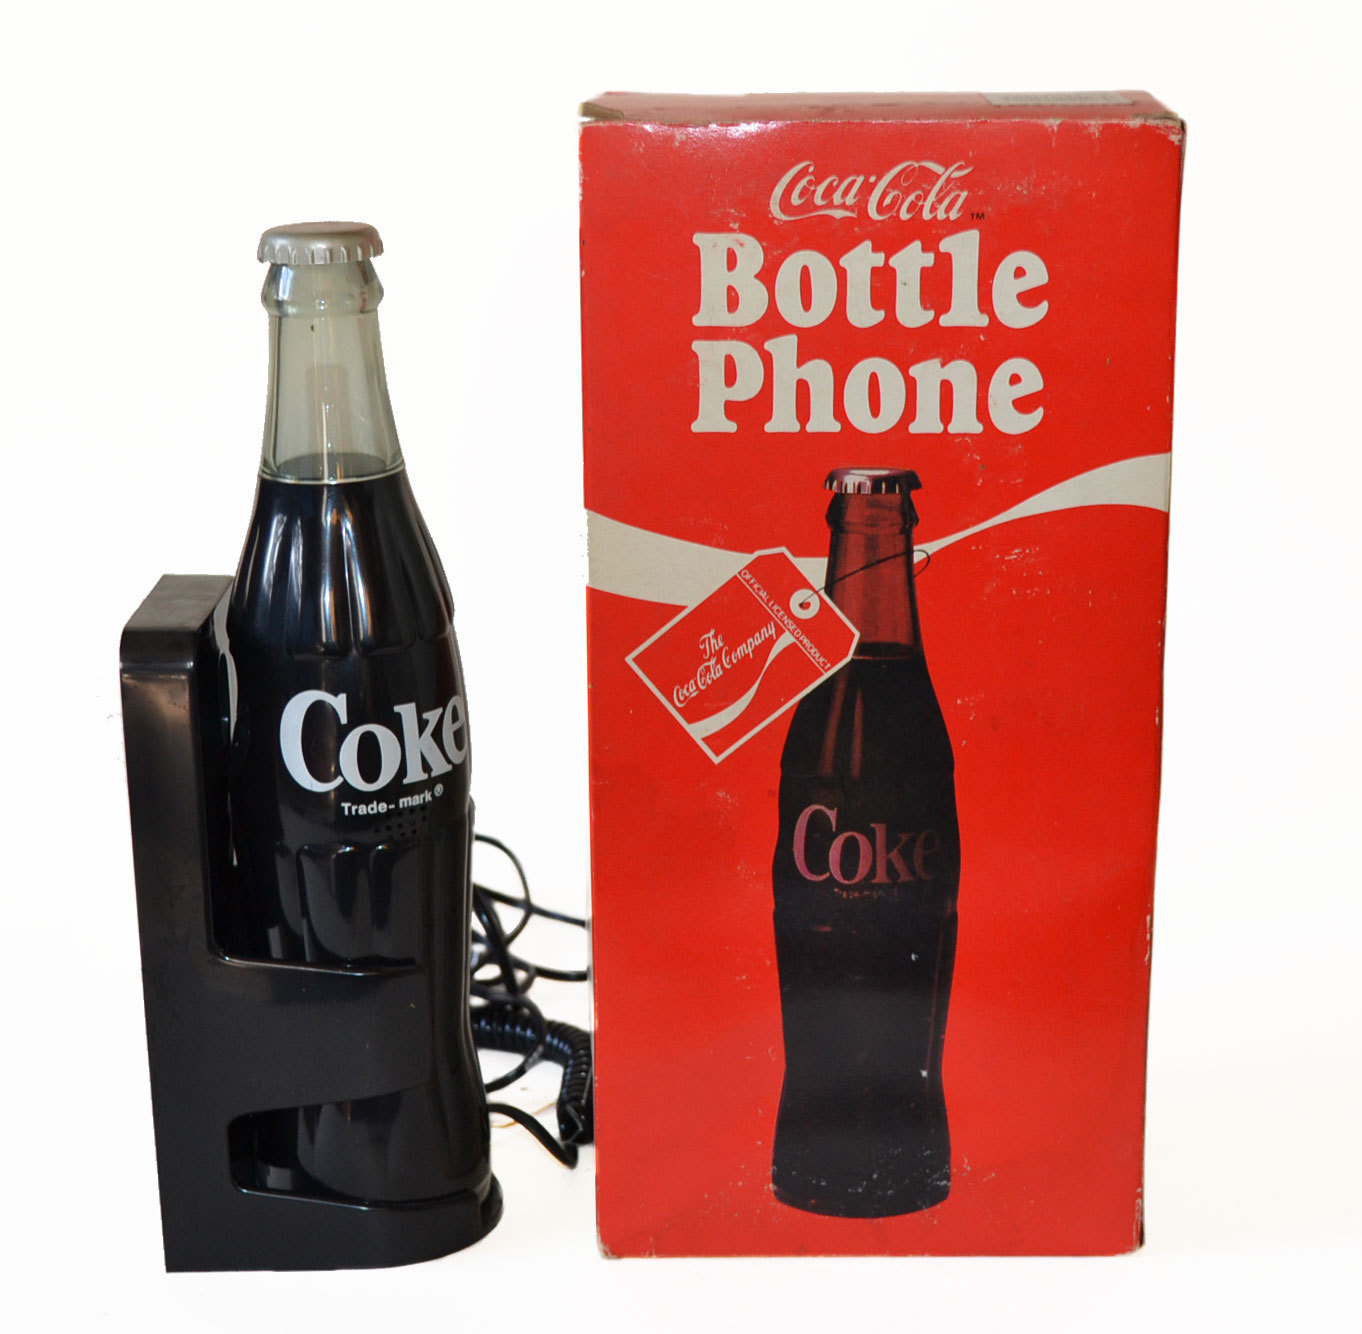 Coca-Colaヴィンテージ 1983 コカ・コーラ ボトル型 電話機 - 雑貨